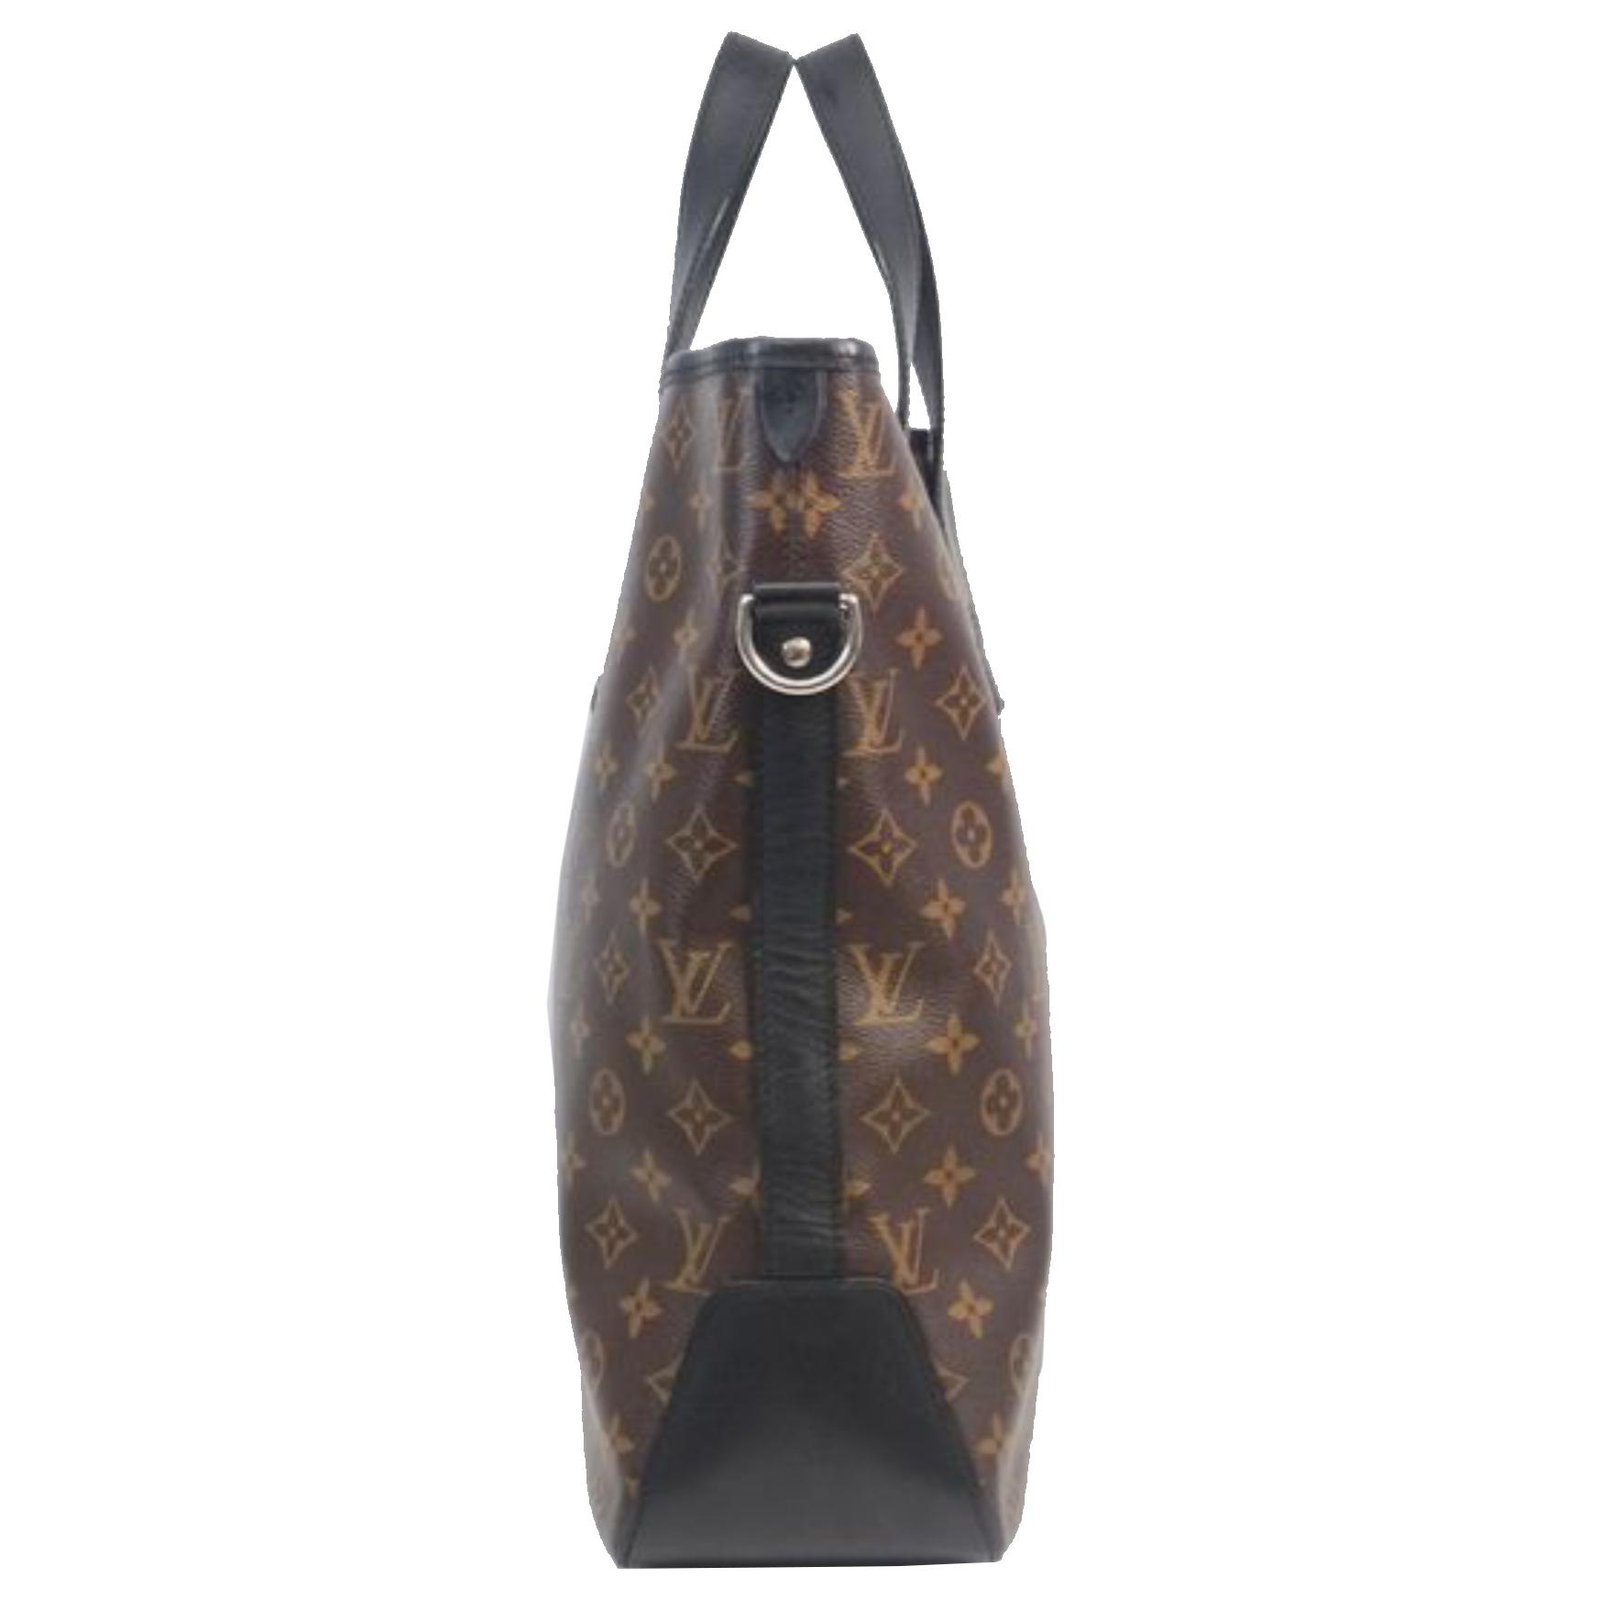 Louis Vuitton - Monogram Canvas Leather Macassar Davis Tote Bag